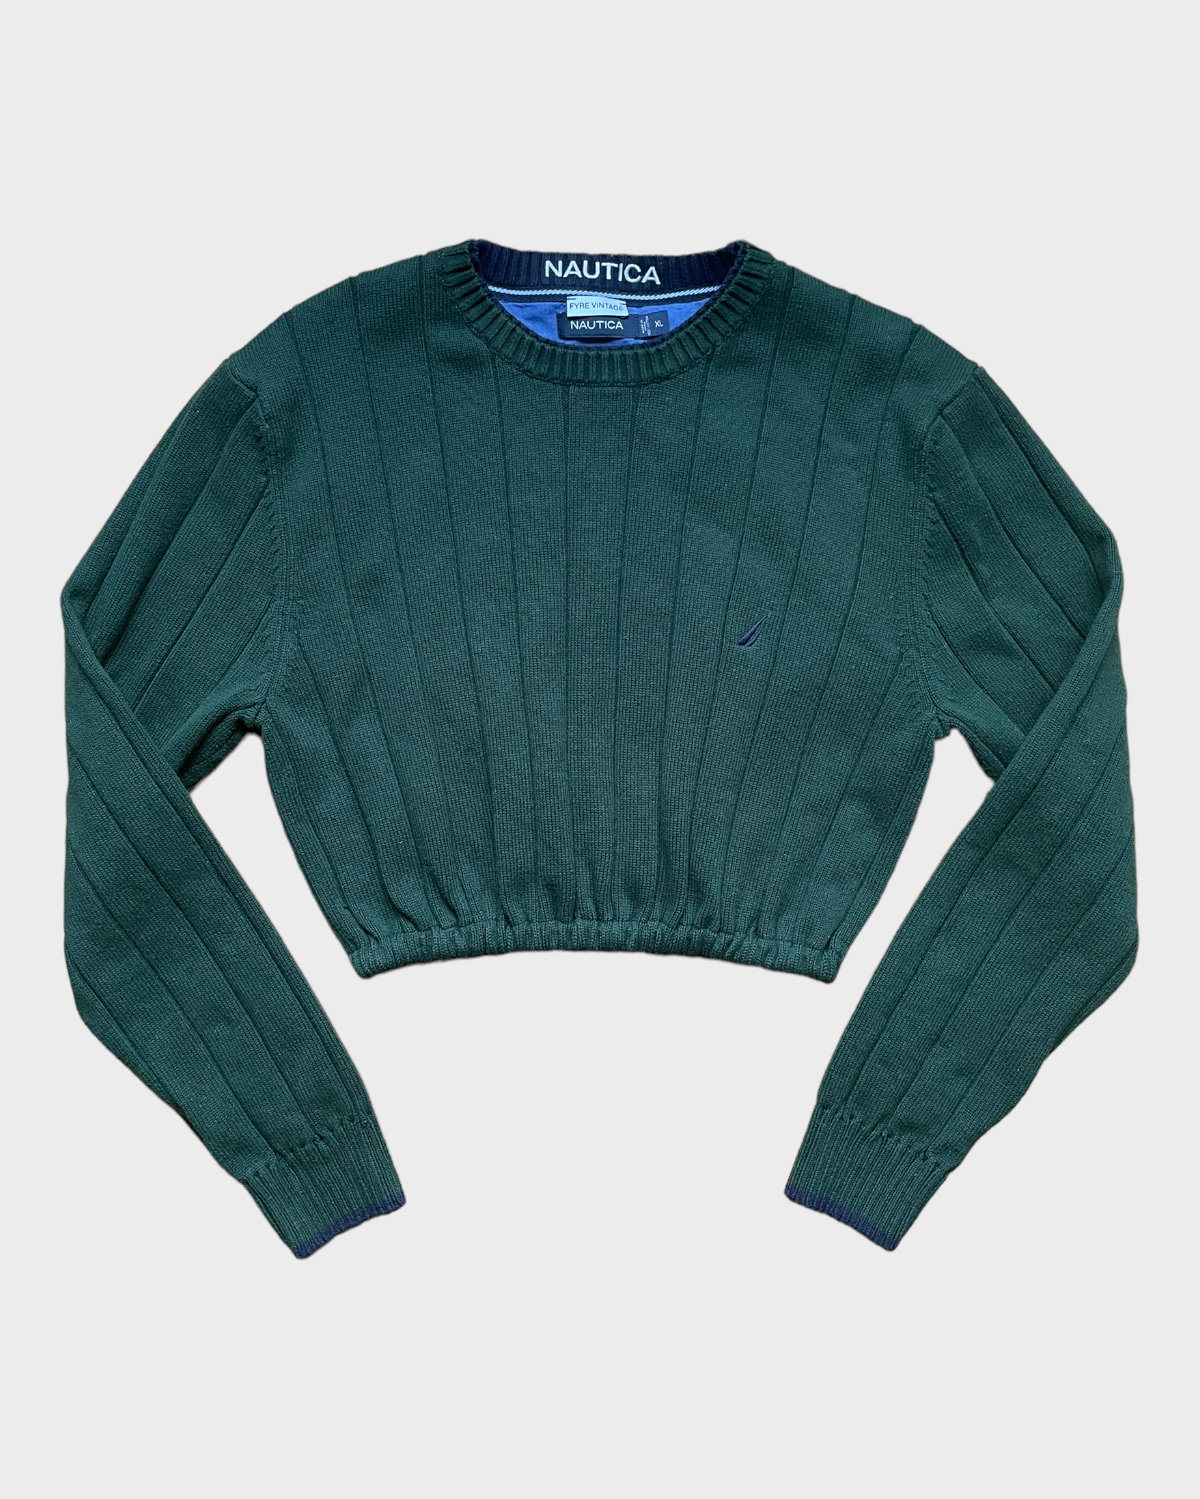 Reworked Nautica Green Crop Grandpa Sweater (M-XL)